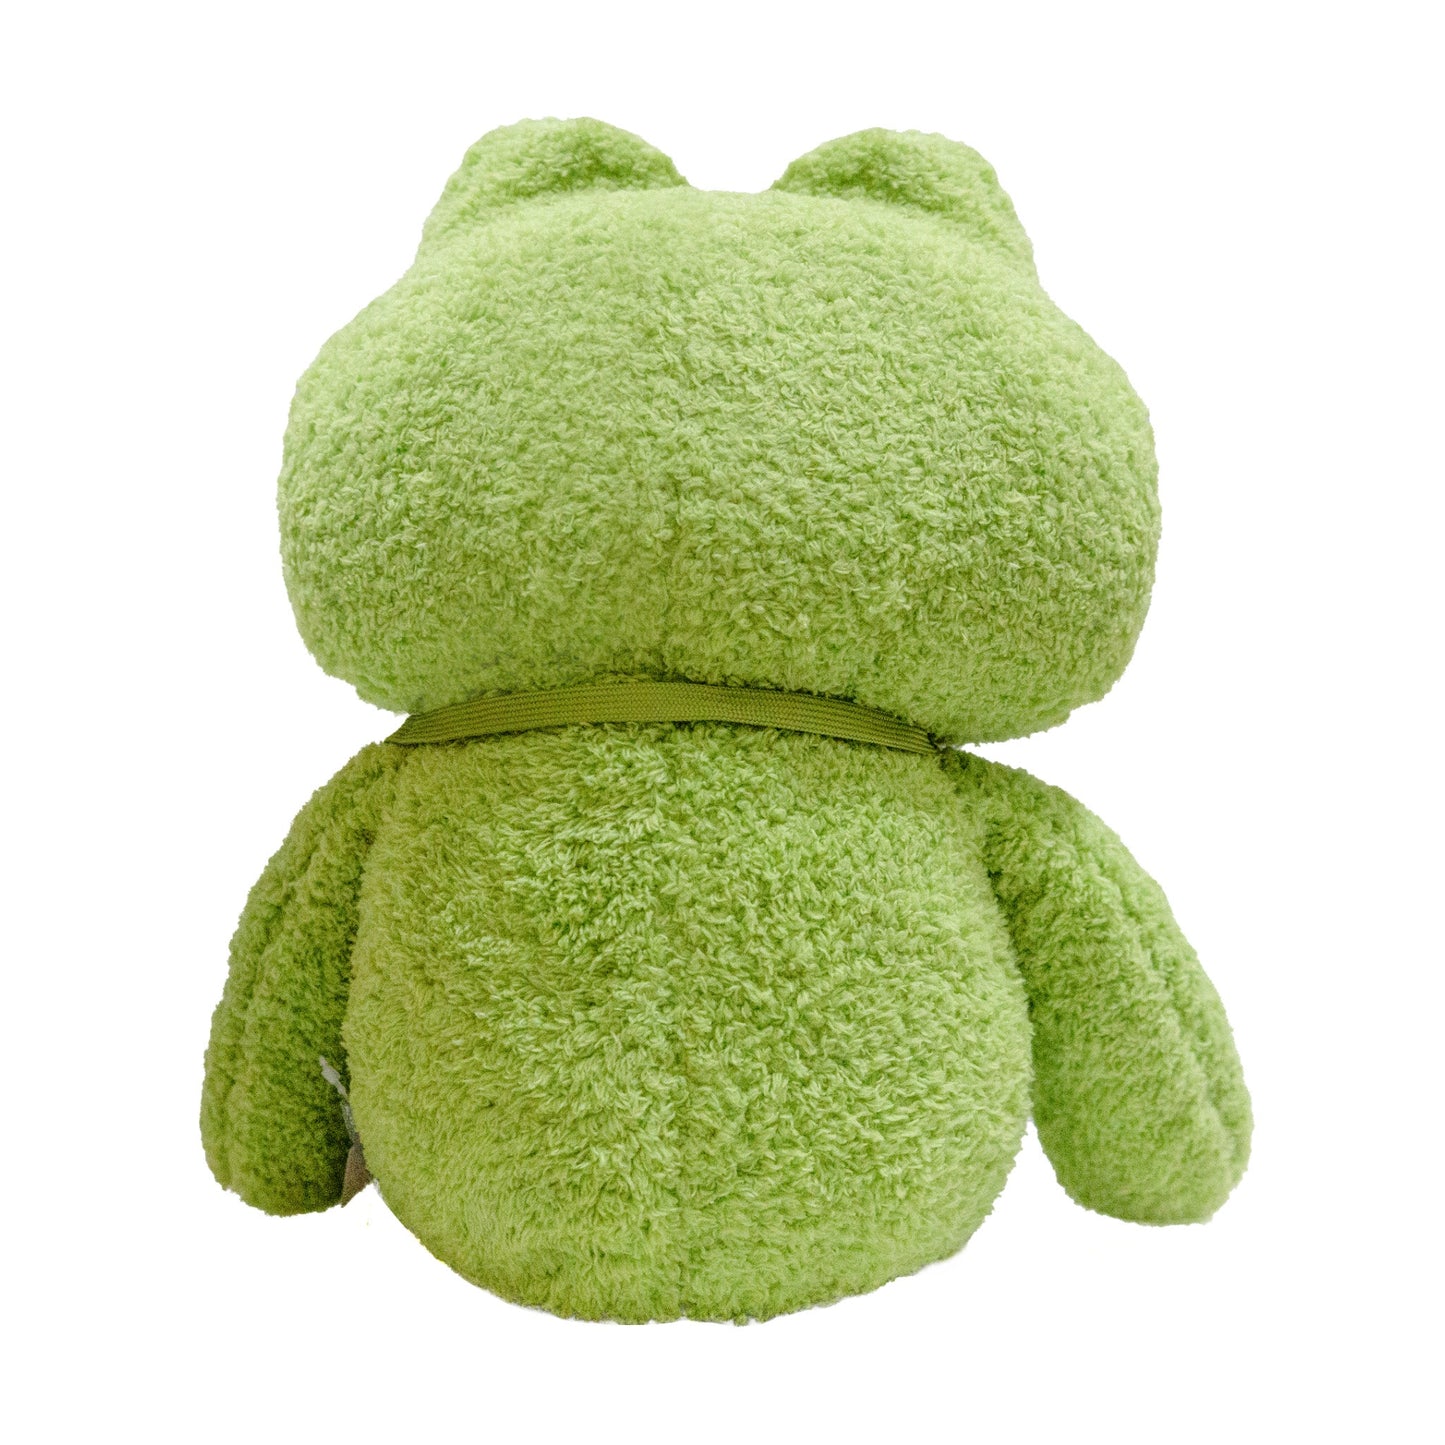 Cute Green Frog Plush Toy Stuffed Animal   